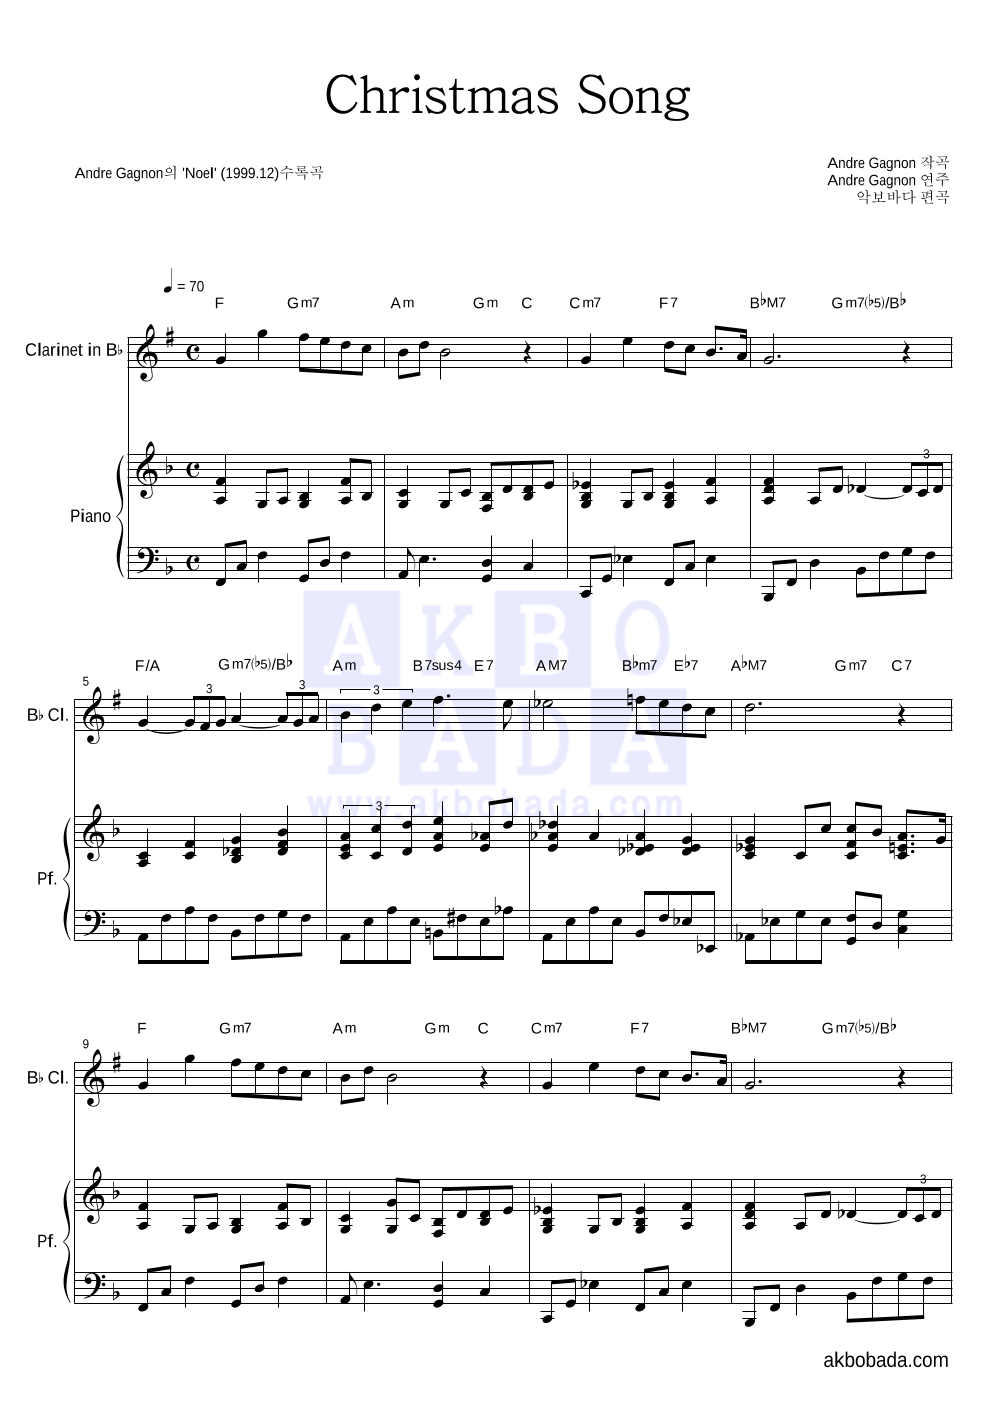 Andre Gagnon - Christmas Song 클라리넷&피아노 악보 